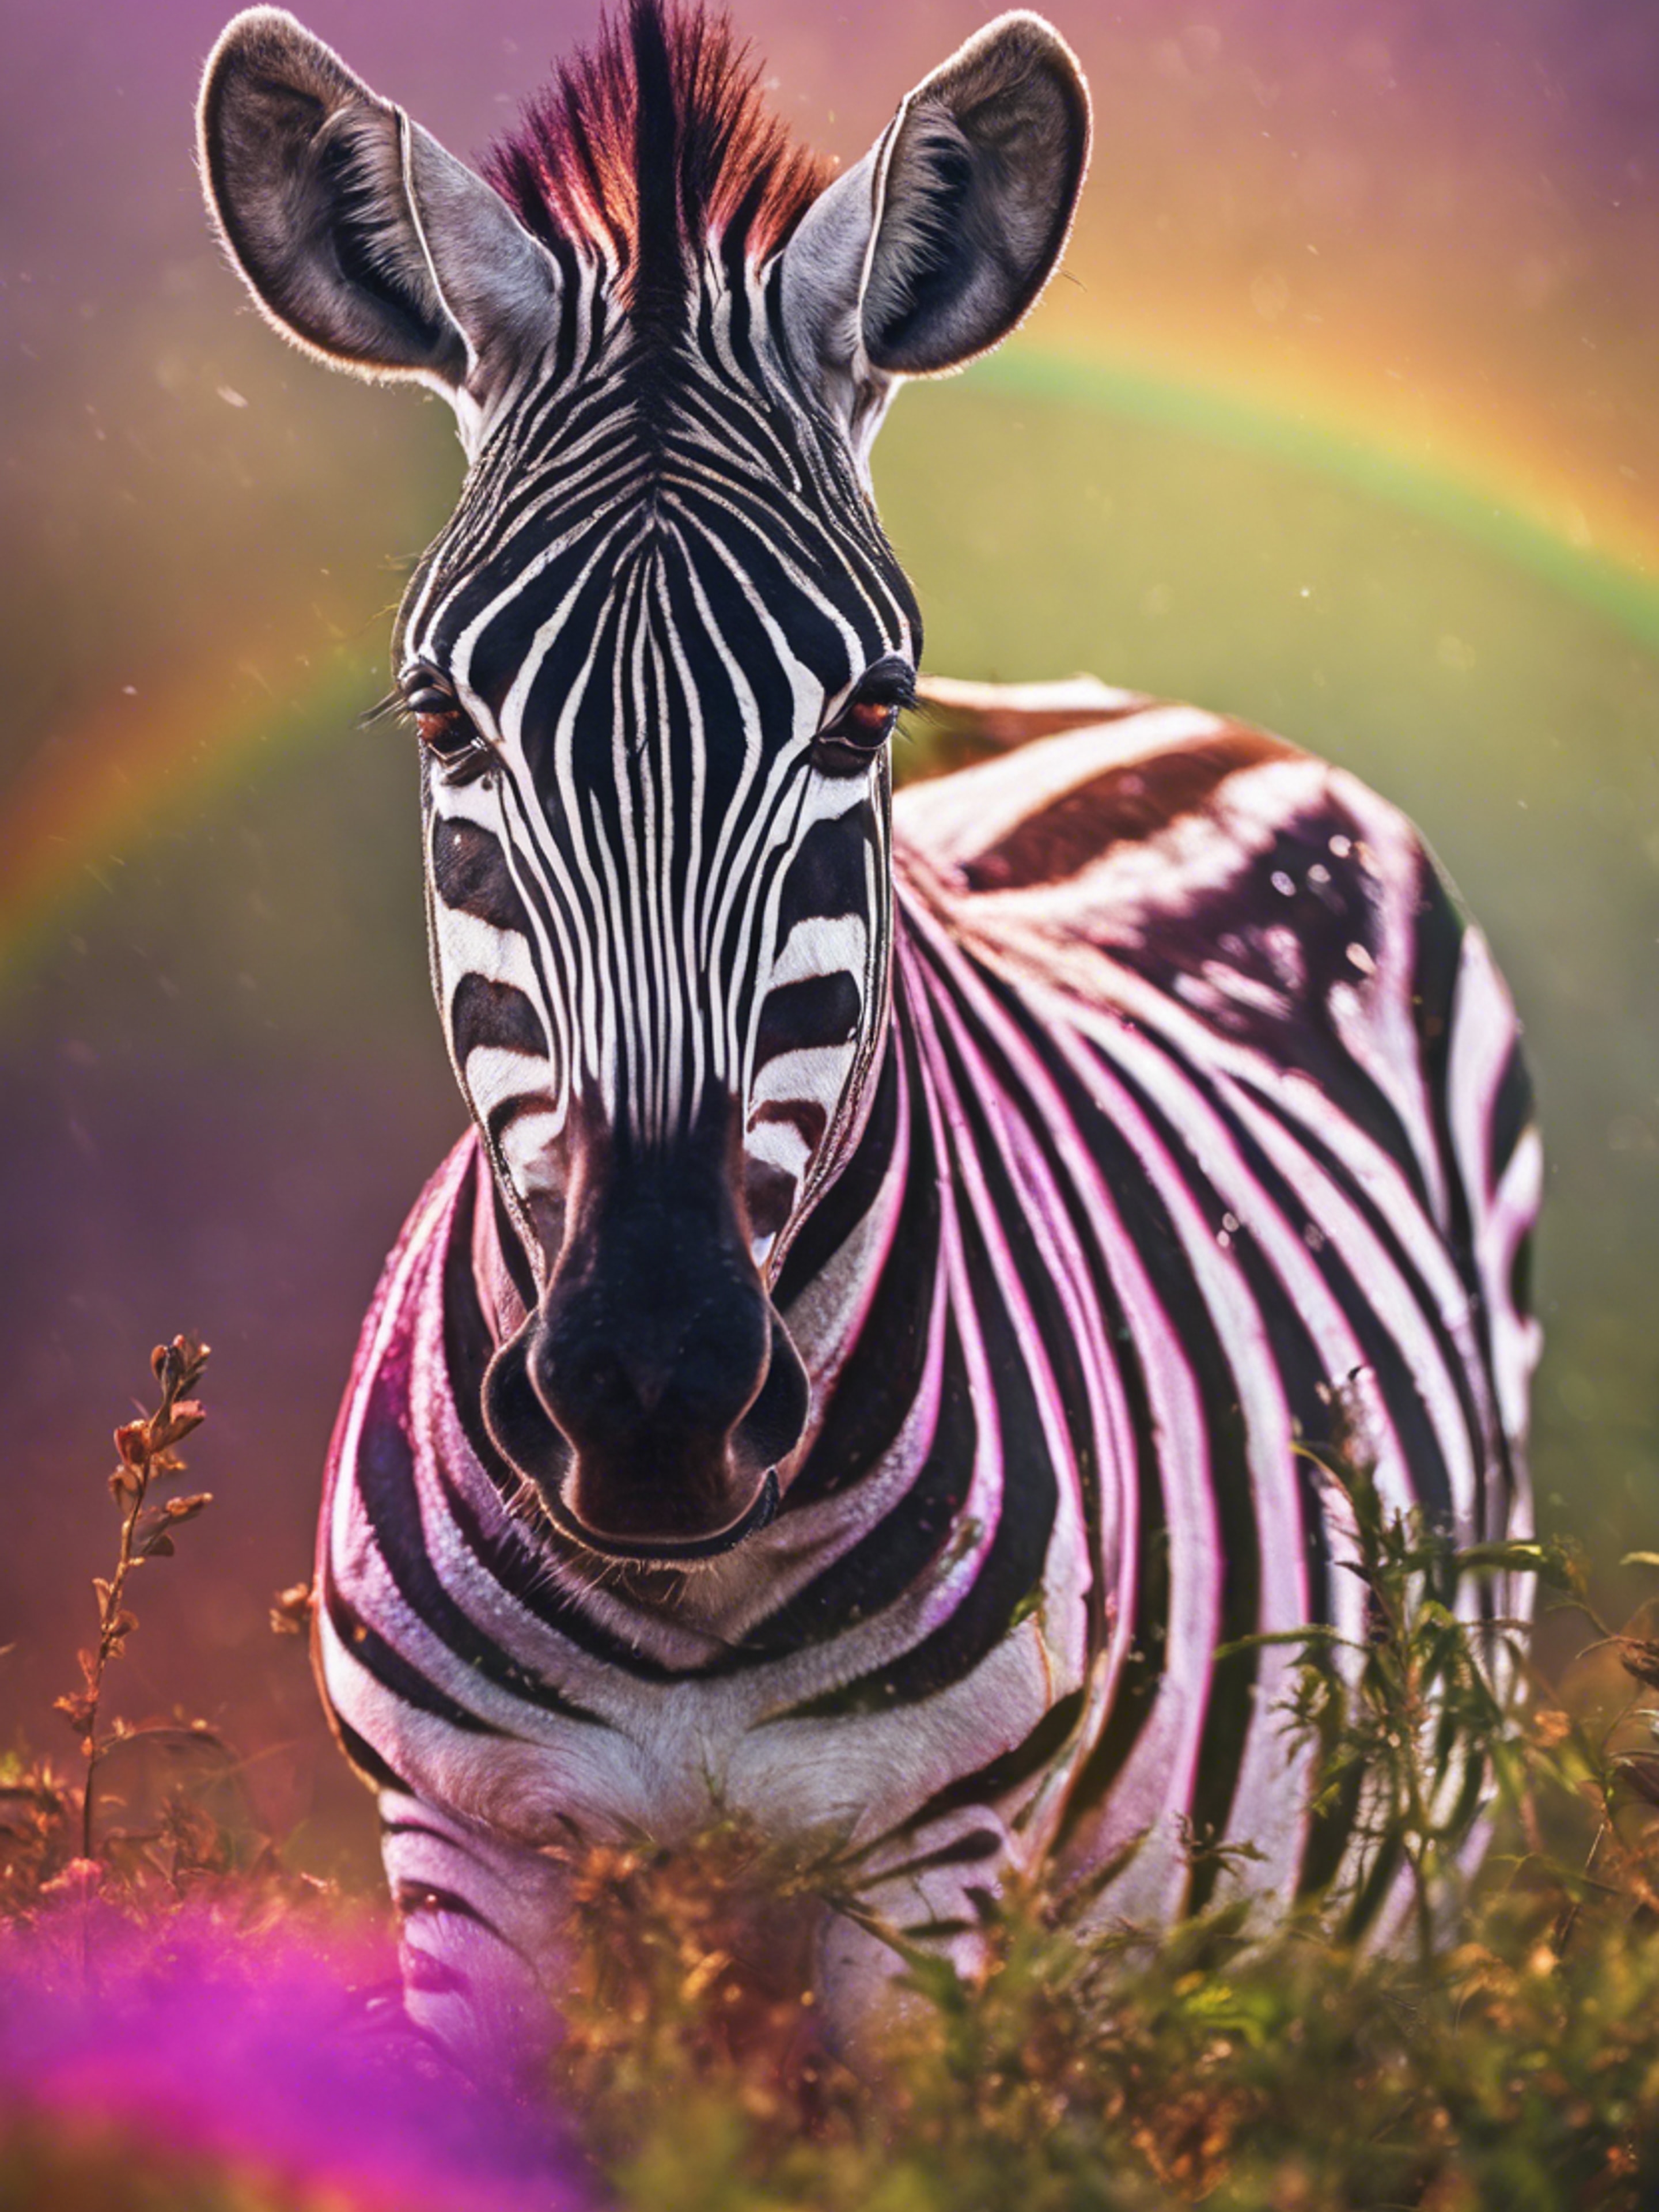 A zebra in the African wild under a vibrant rainbow after a short rain shower. Papel de parede[a984eacdffd5482bb541]